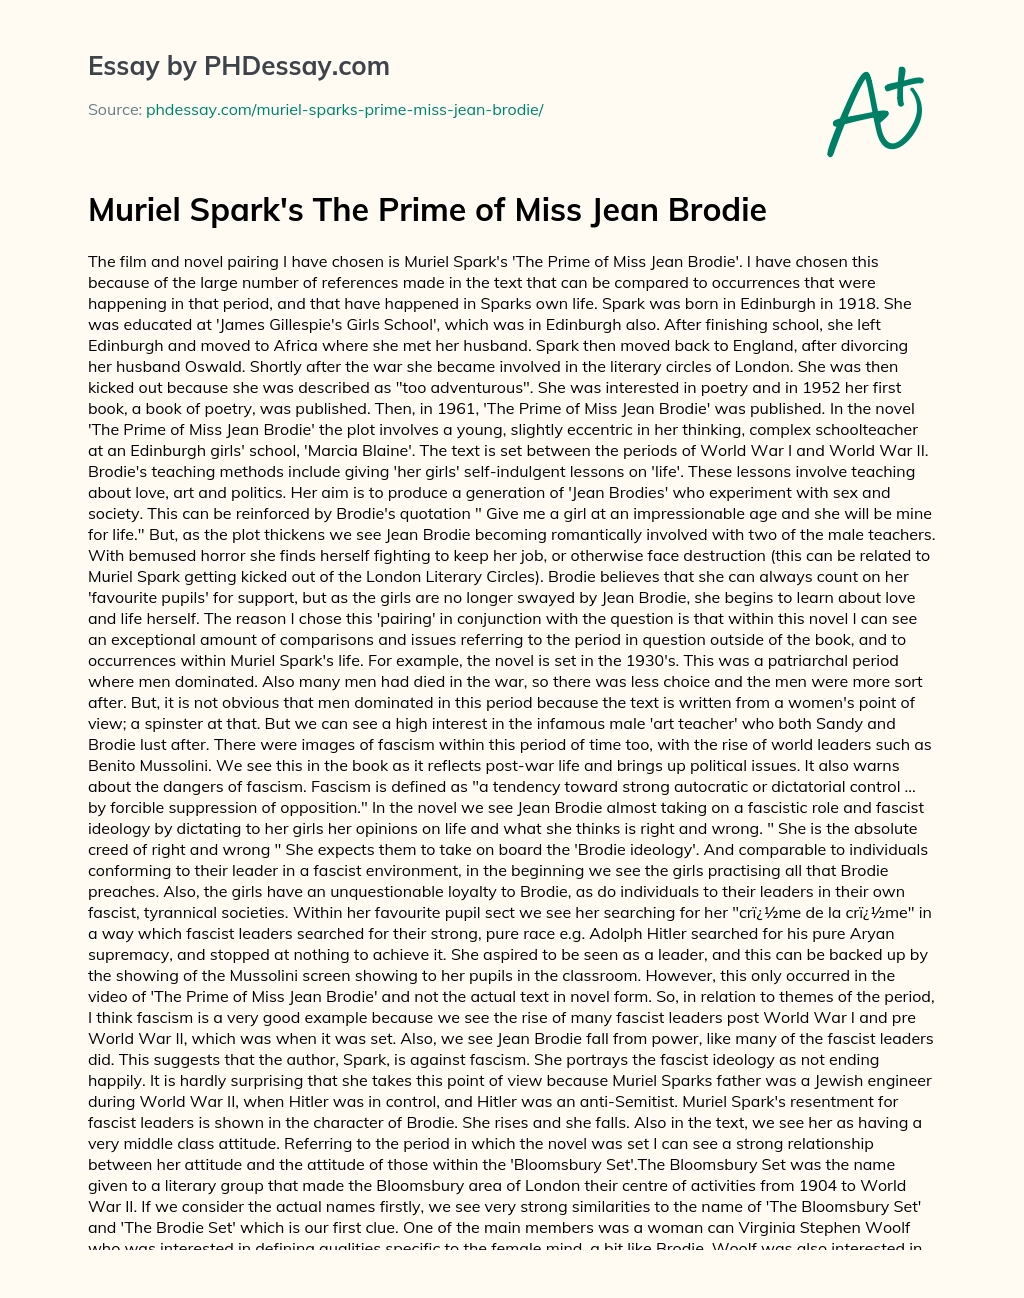 Muriel Spark’s The Prime of Miss Jean Brodie essay